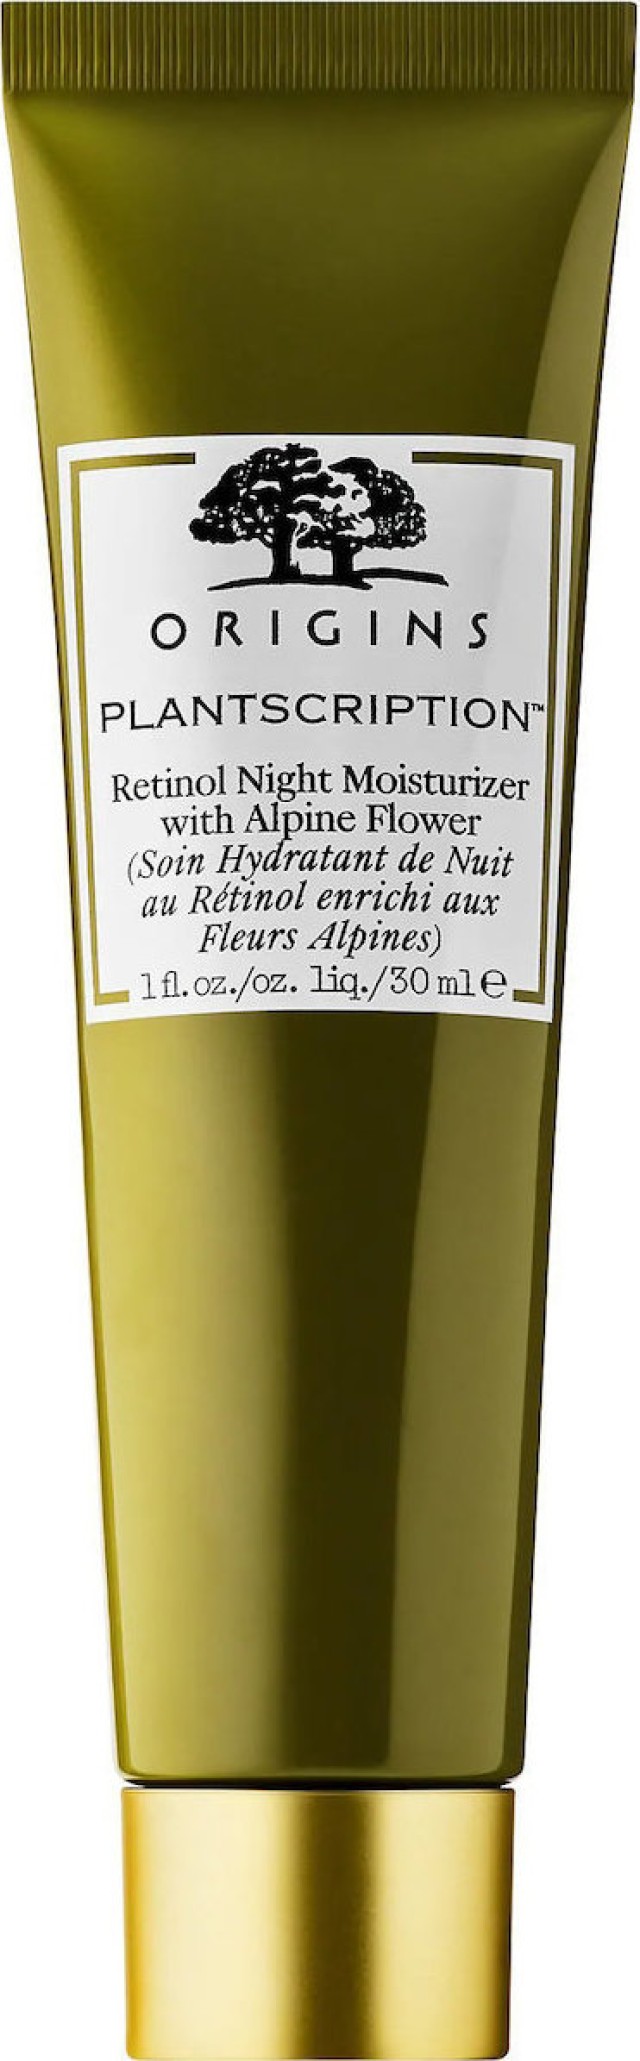 Origins Plantscription Retinol Night Moisturizer with Alpine Flower Ενυδατική Θρεπτική Κρέμα Νυκτός με Ρετινόλη 30ml